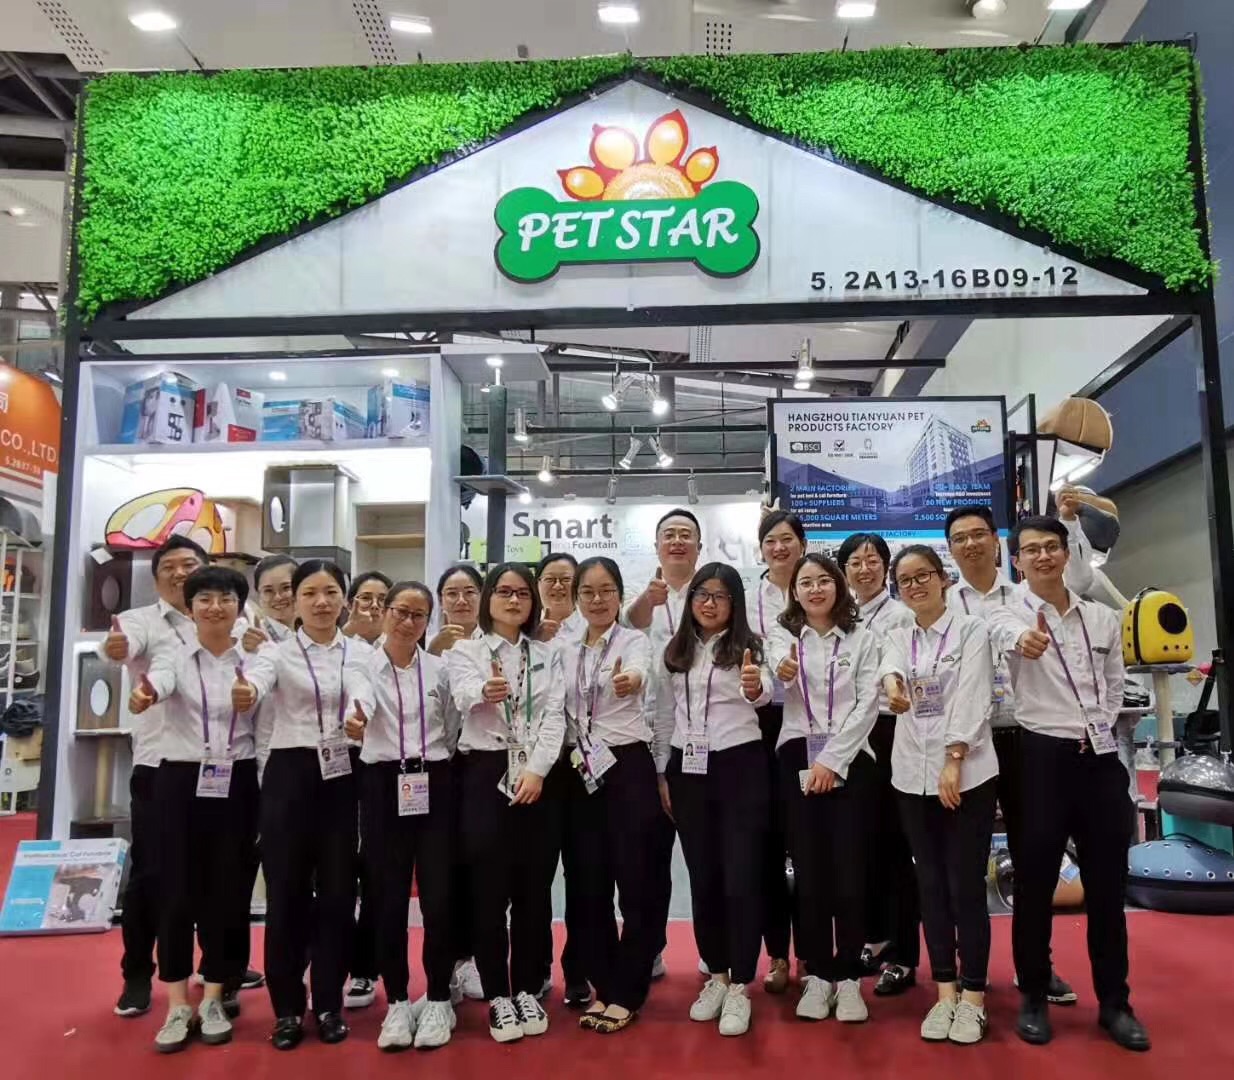 The canton fair of tianyuan petstar